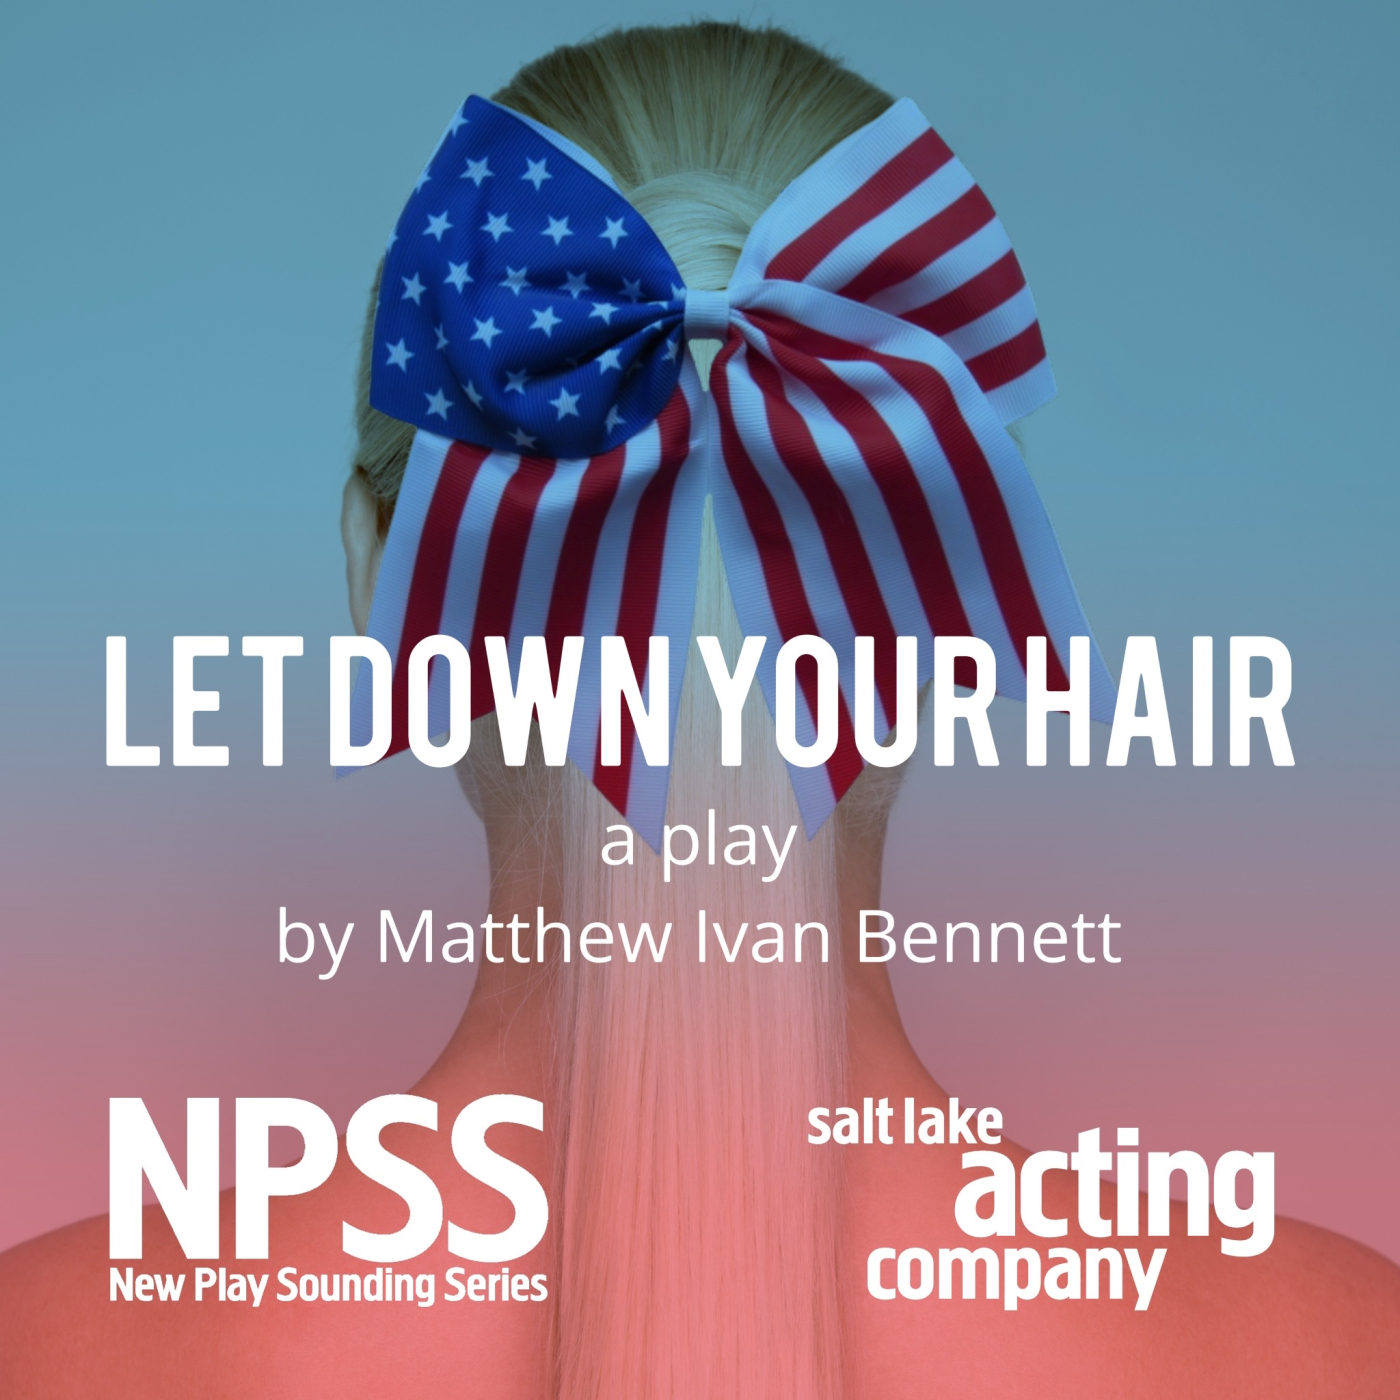 Let Down Your Hair by Matthew Ivan Bennett